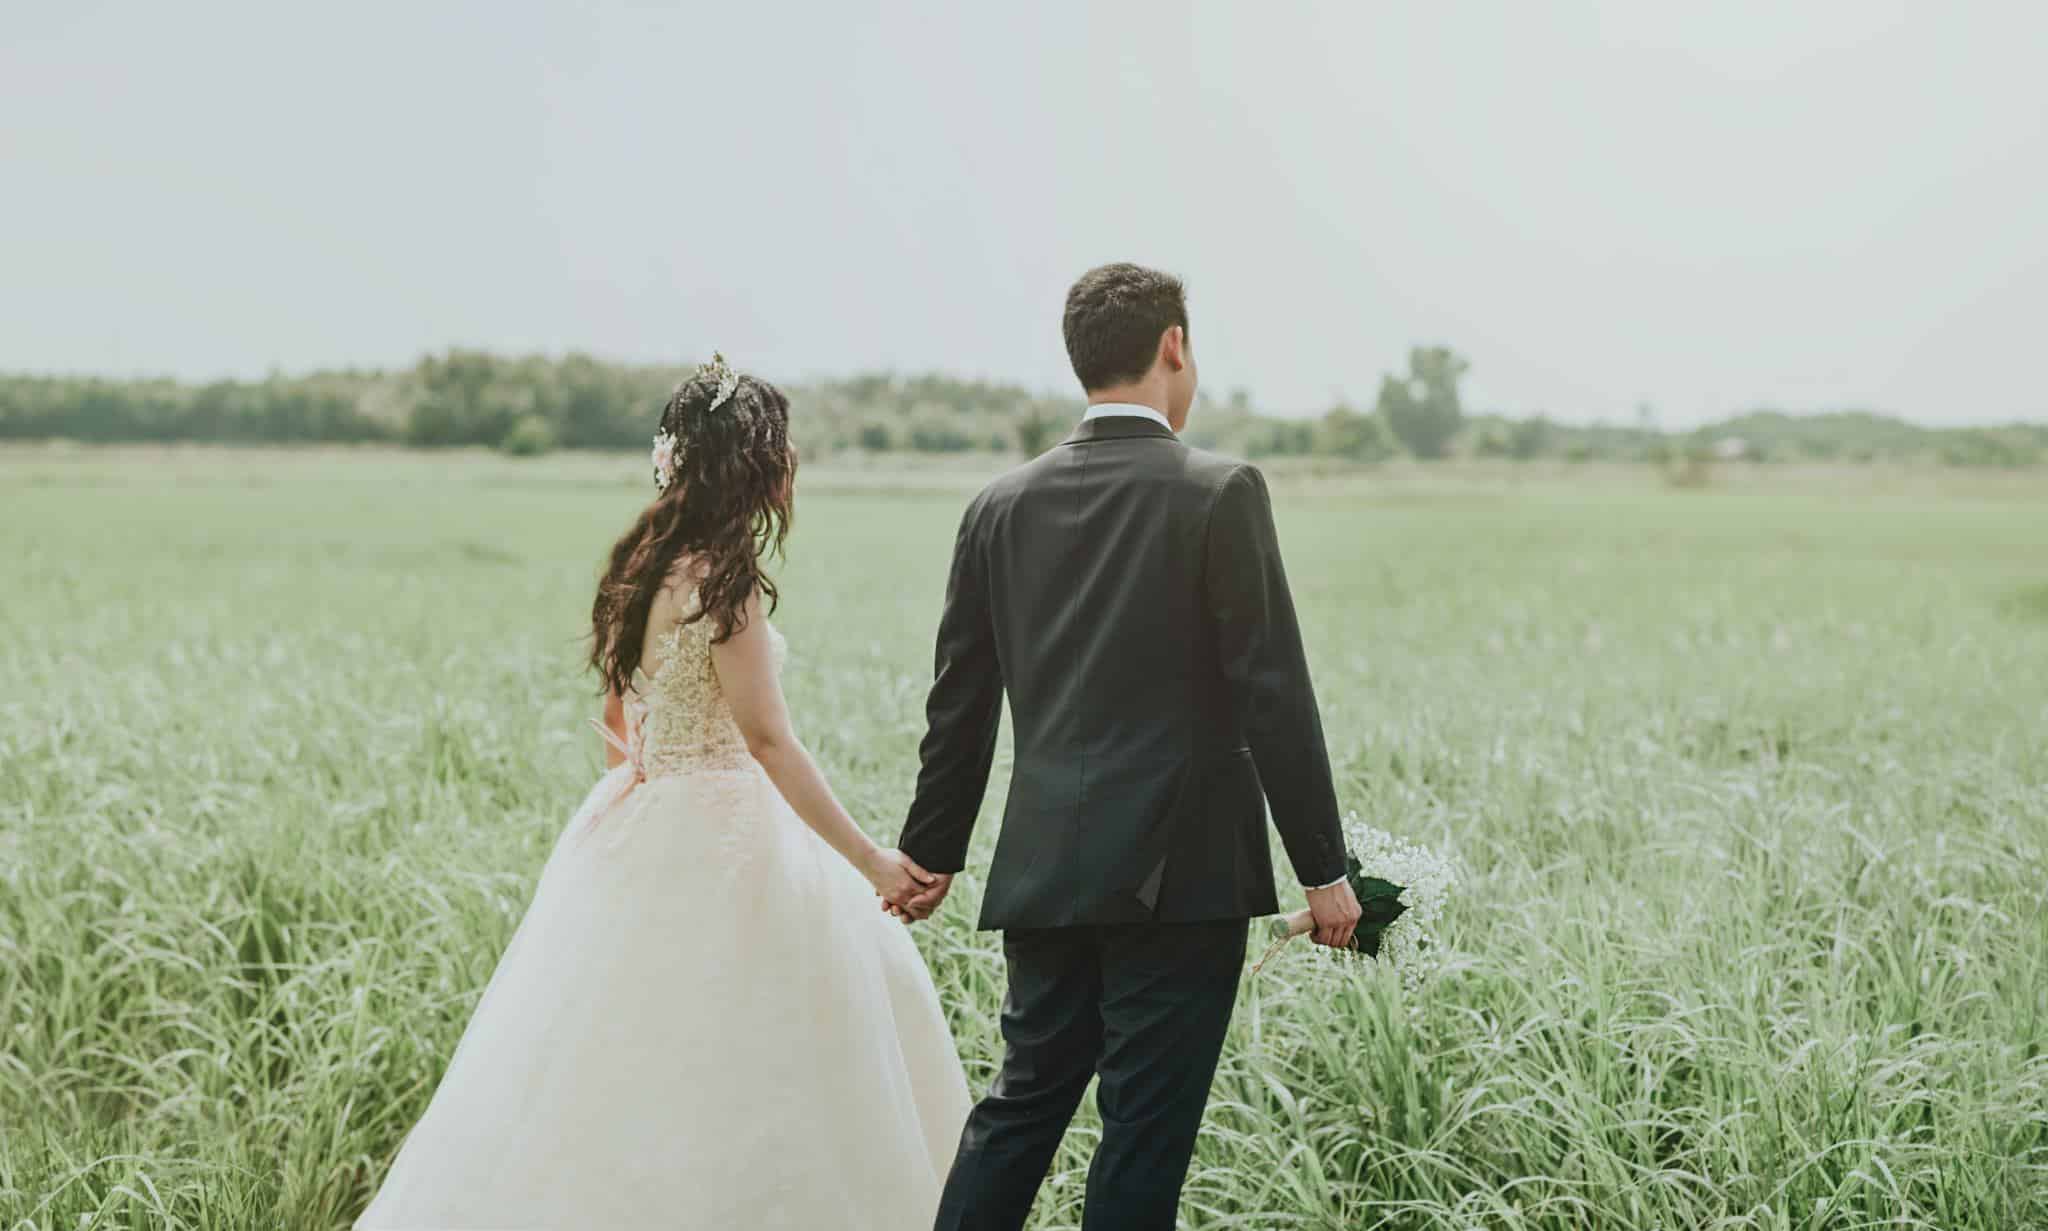 Smart Spending for Your Big Day: 9 Money-Saving Wedding Tips